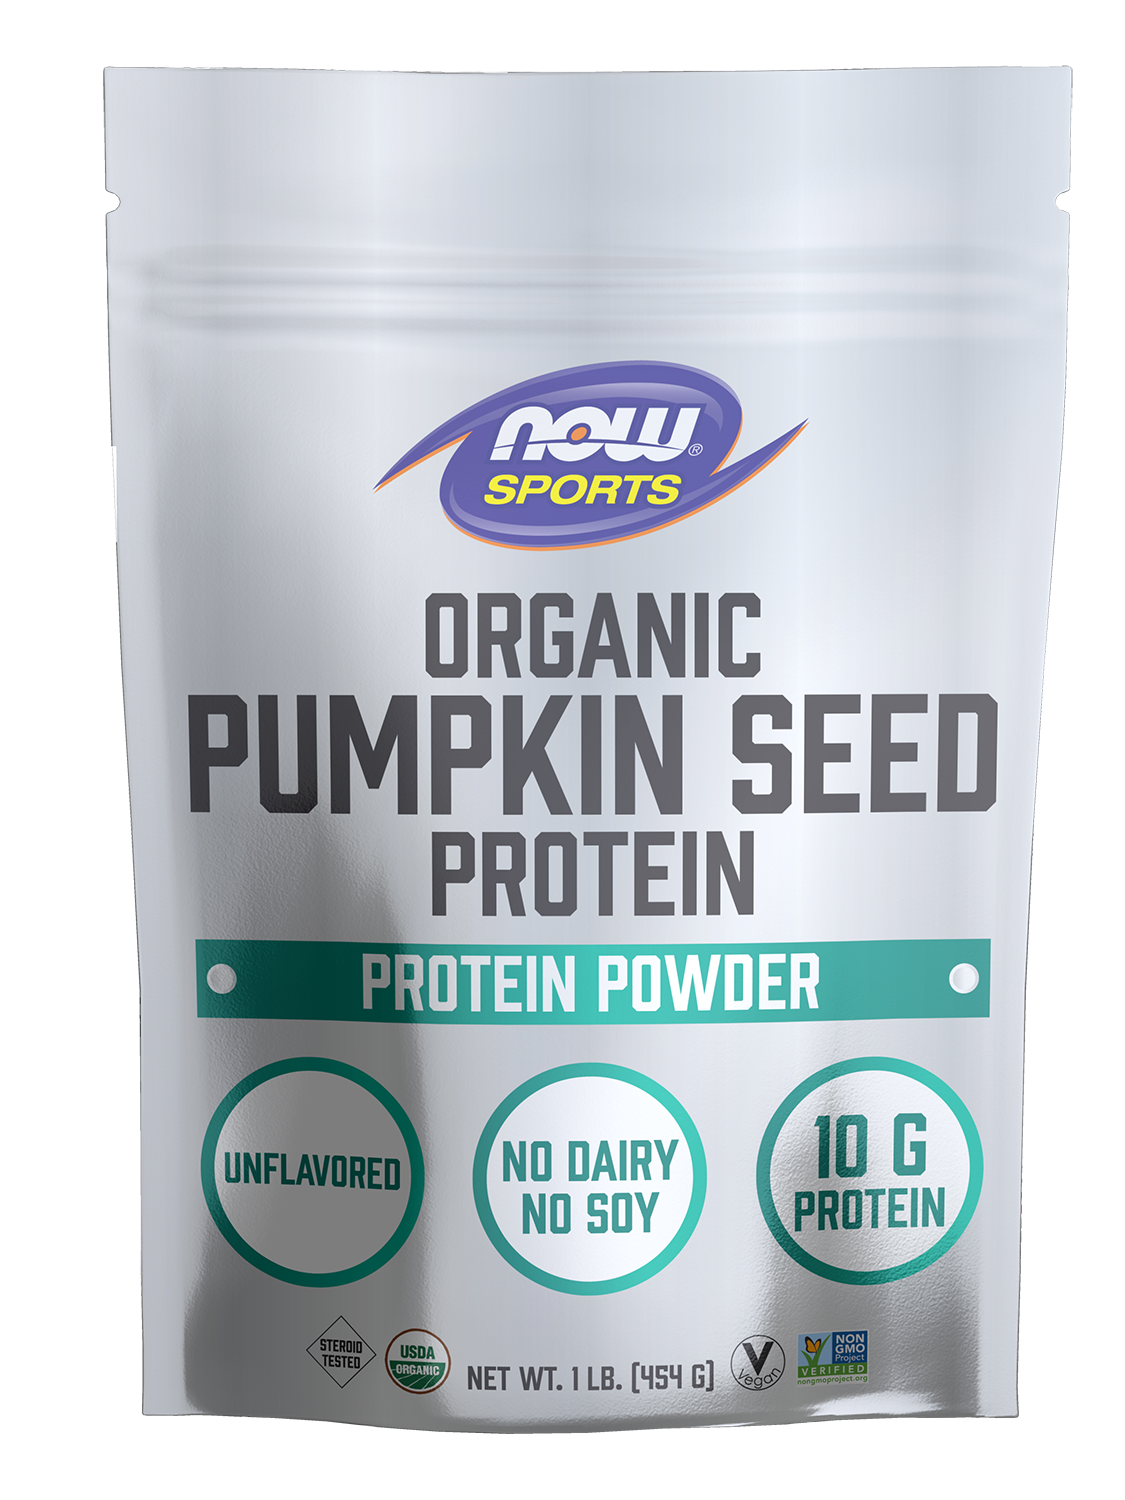 Pumpkin Seed Protein, Organic Powder - 1 lb. Bag front